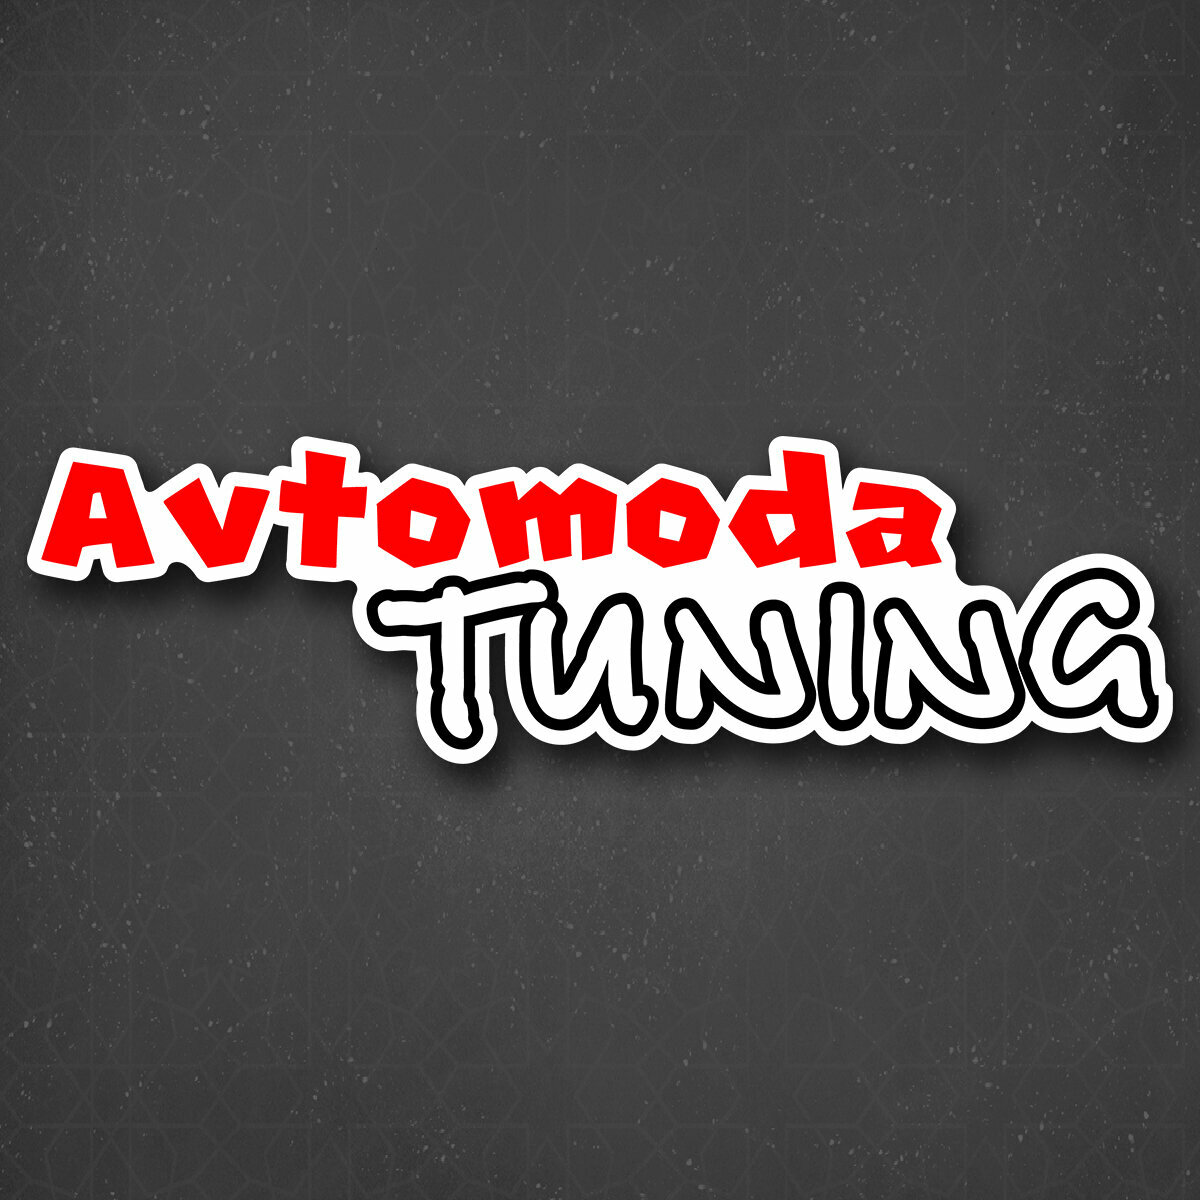 Наклейка на авто "Avtomoda Tuning - Автомода тюнинг" 24x6 см